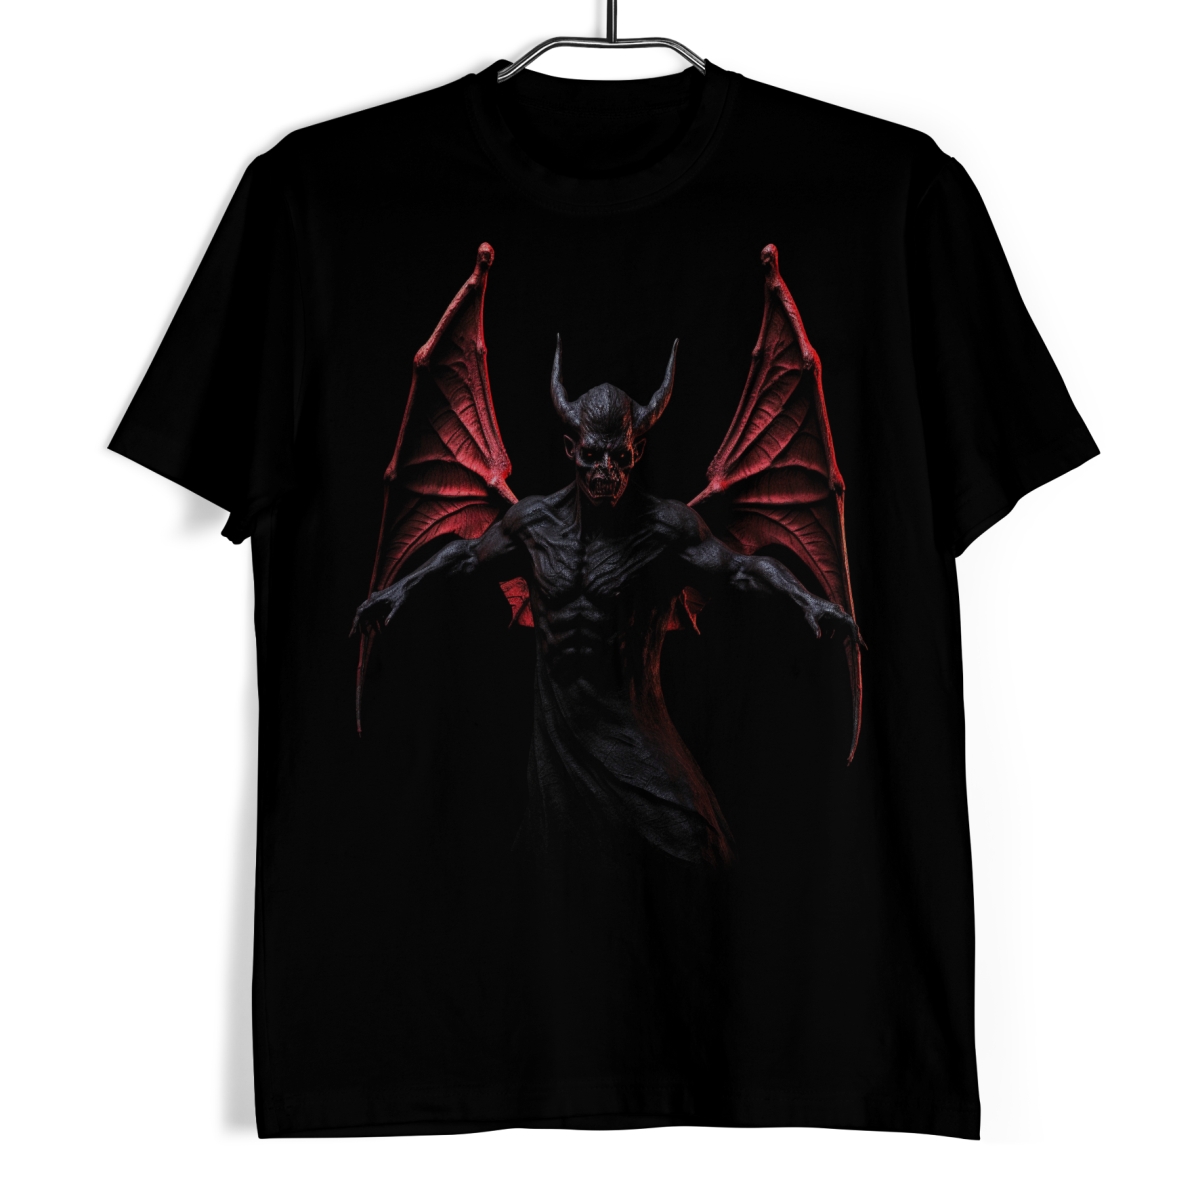 Tričko s lebkou - Křídla temnoty XXL